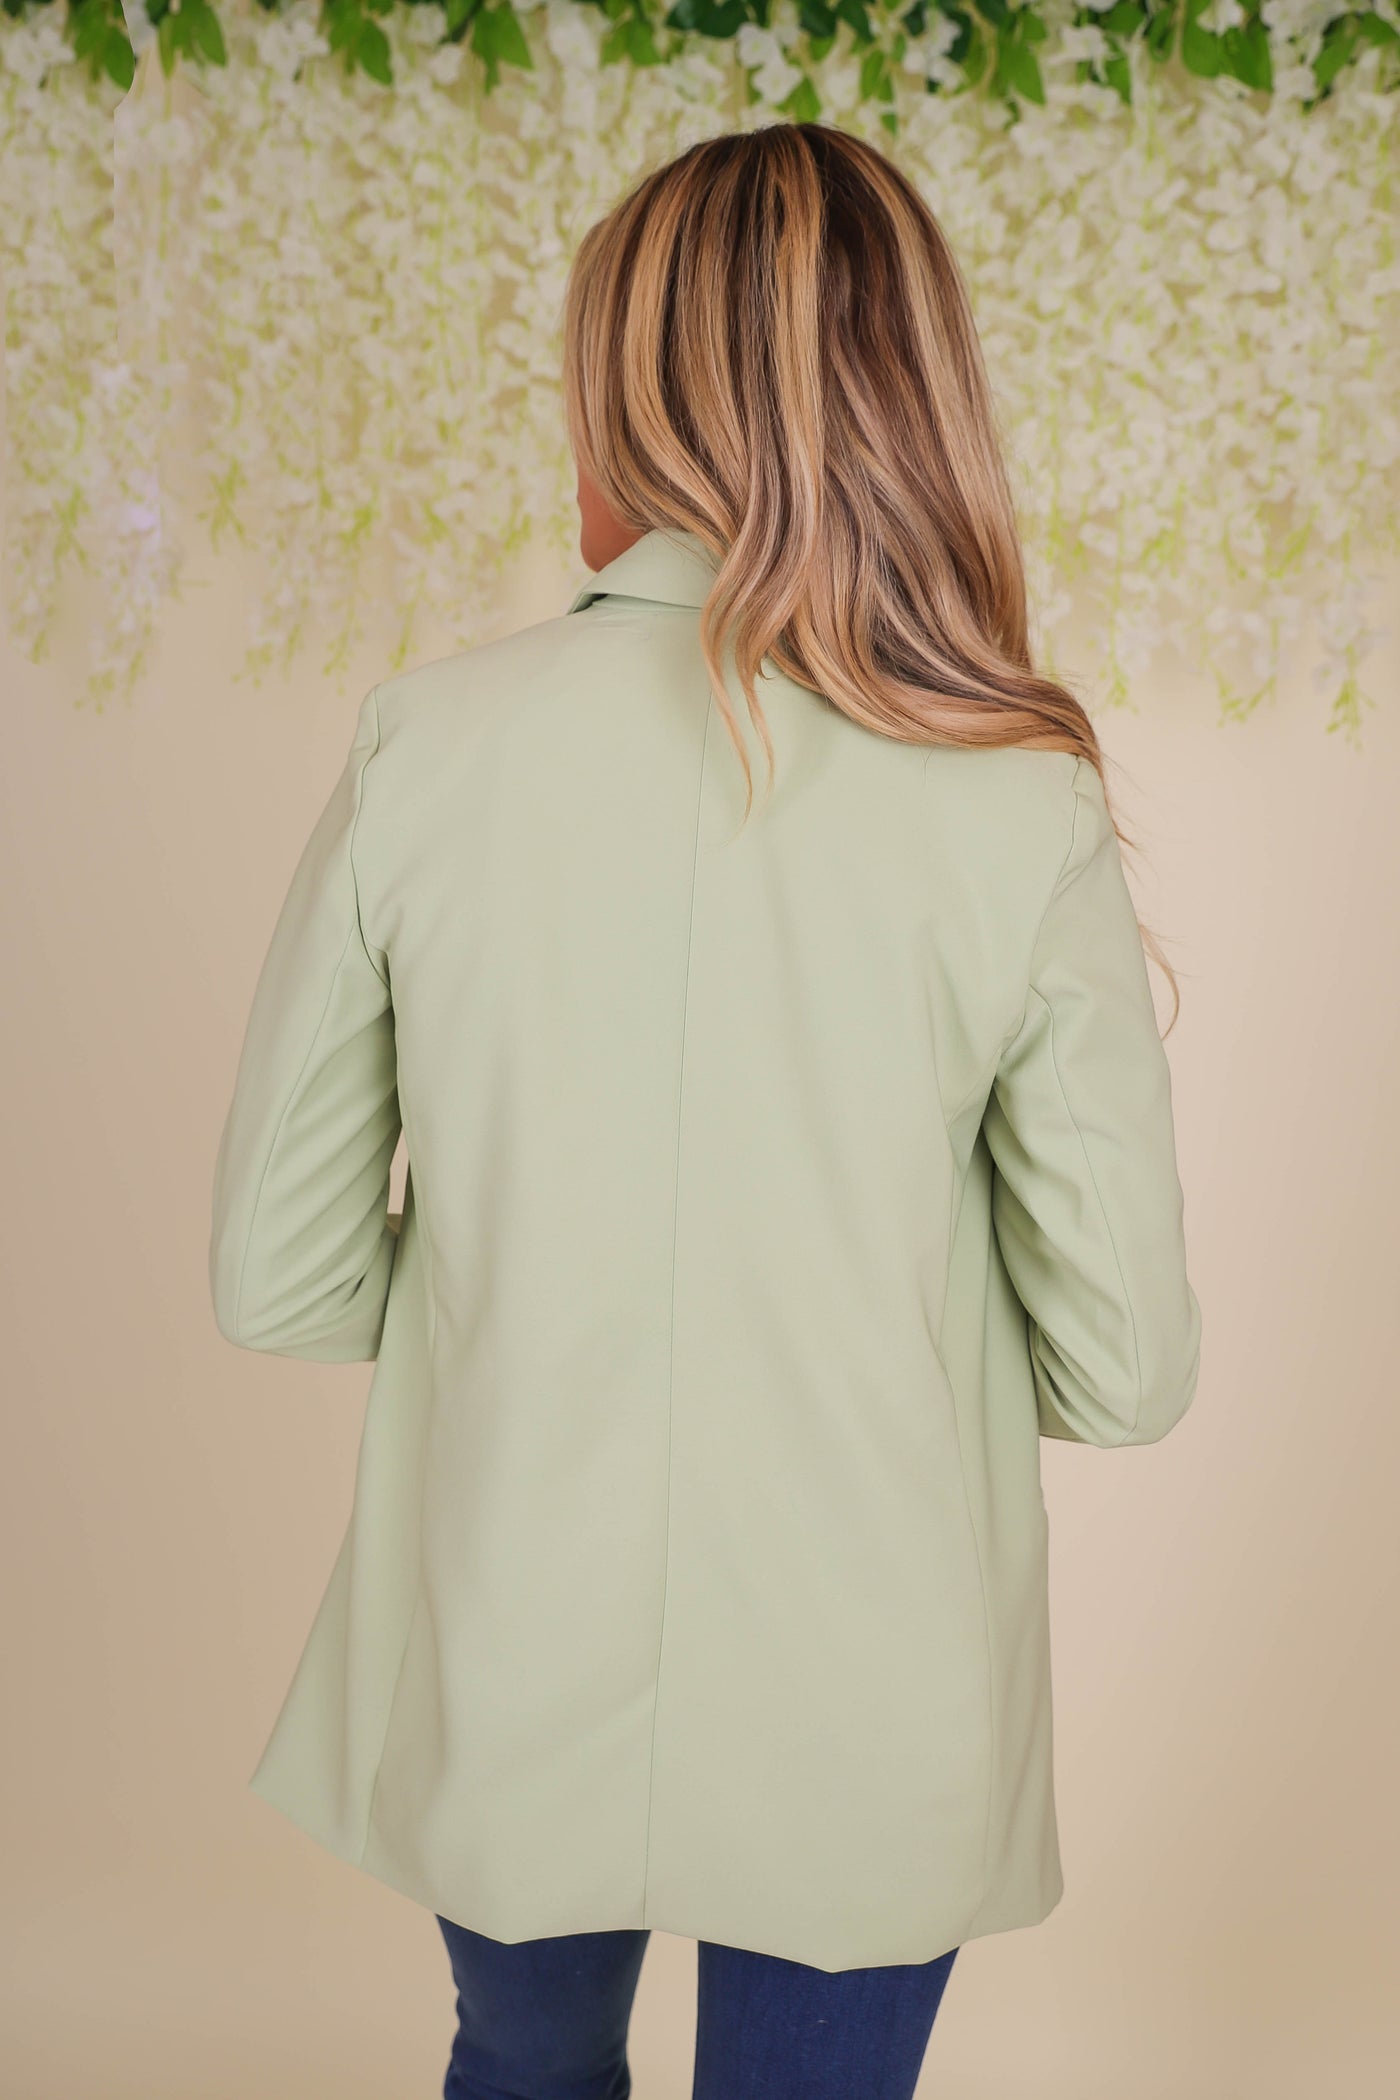 Women's Green Blazer- Fun Green Blazer- Trendy Women's Blazer- Love Tree Blazer